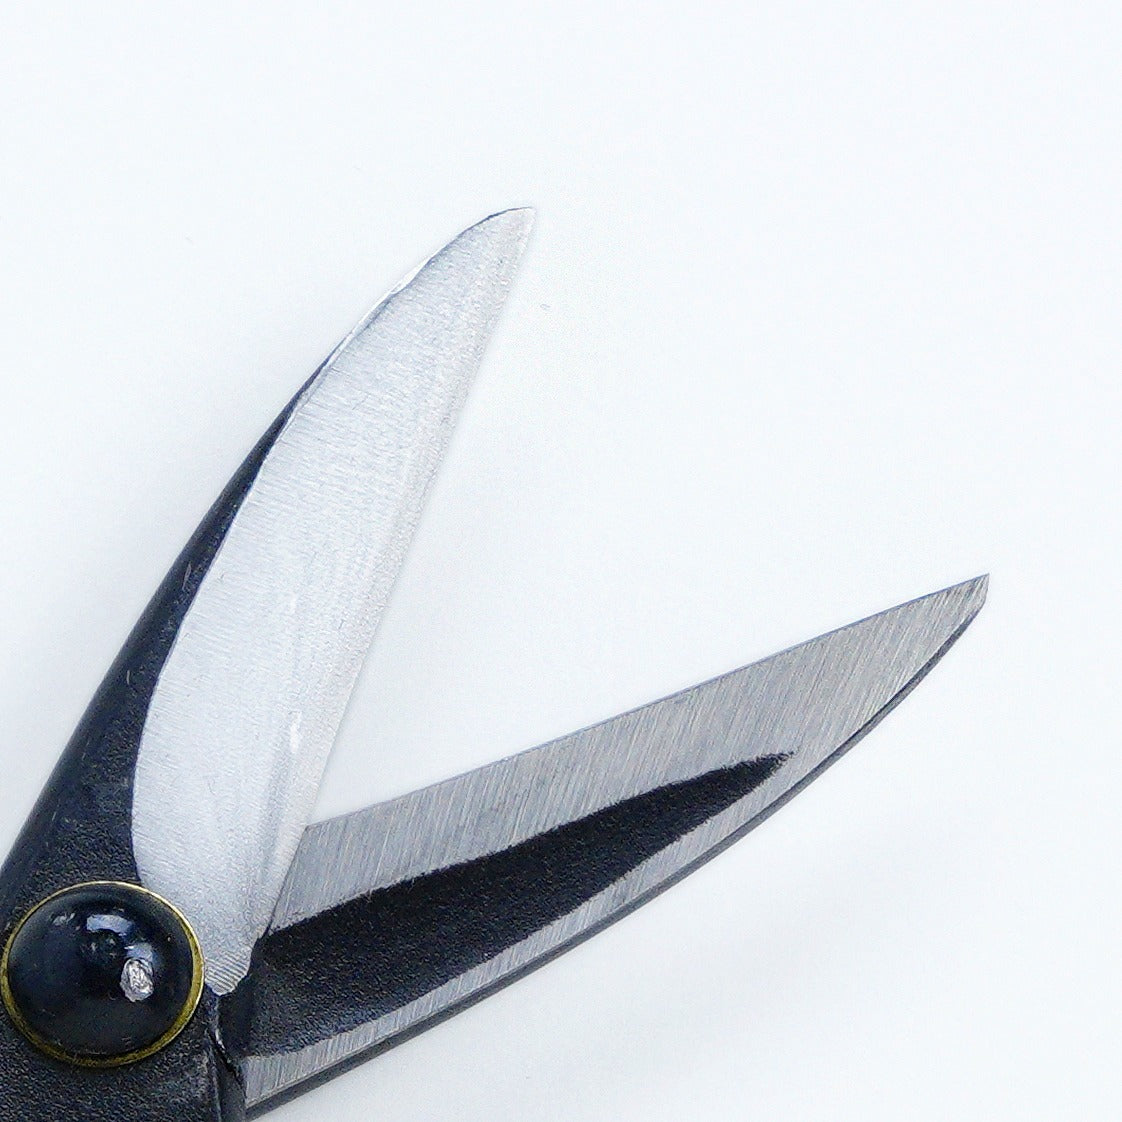 Pruning Shears HASAMI-MASAMUNE Blade Length, Shirogami Steel, For Right-Hander